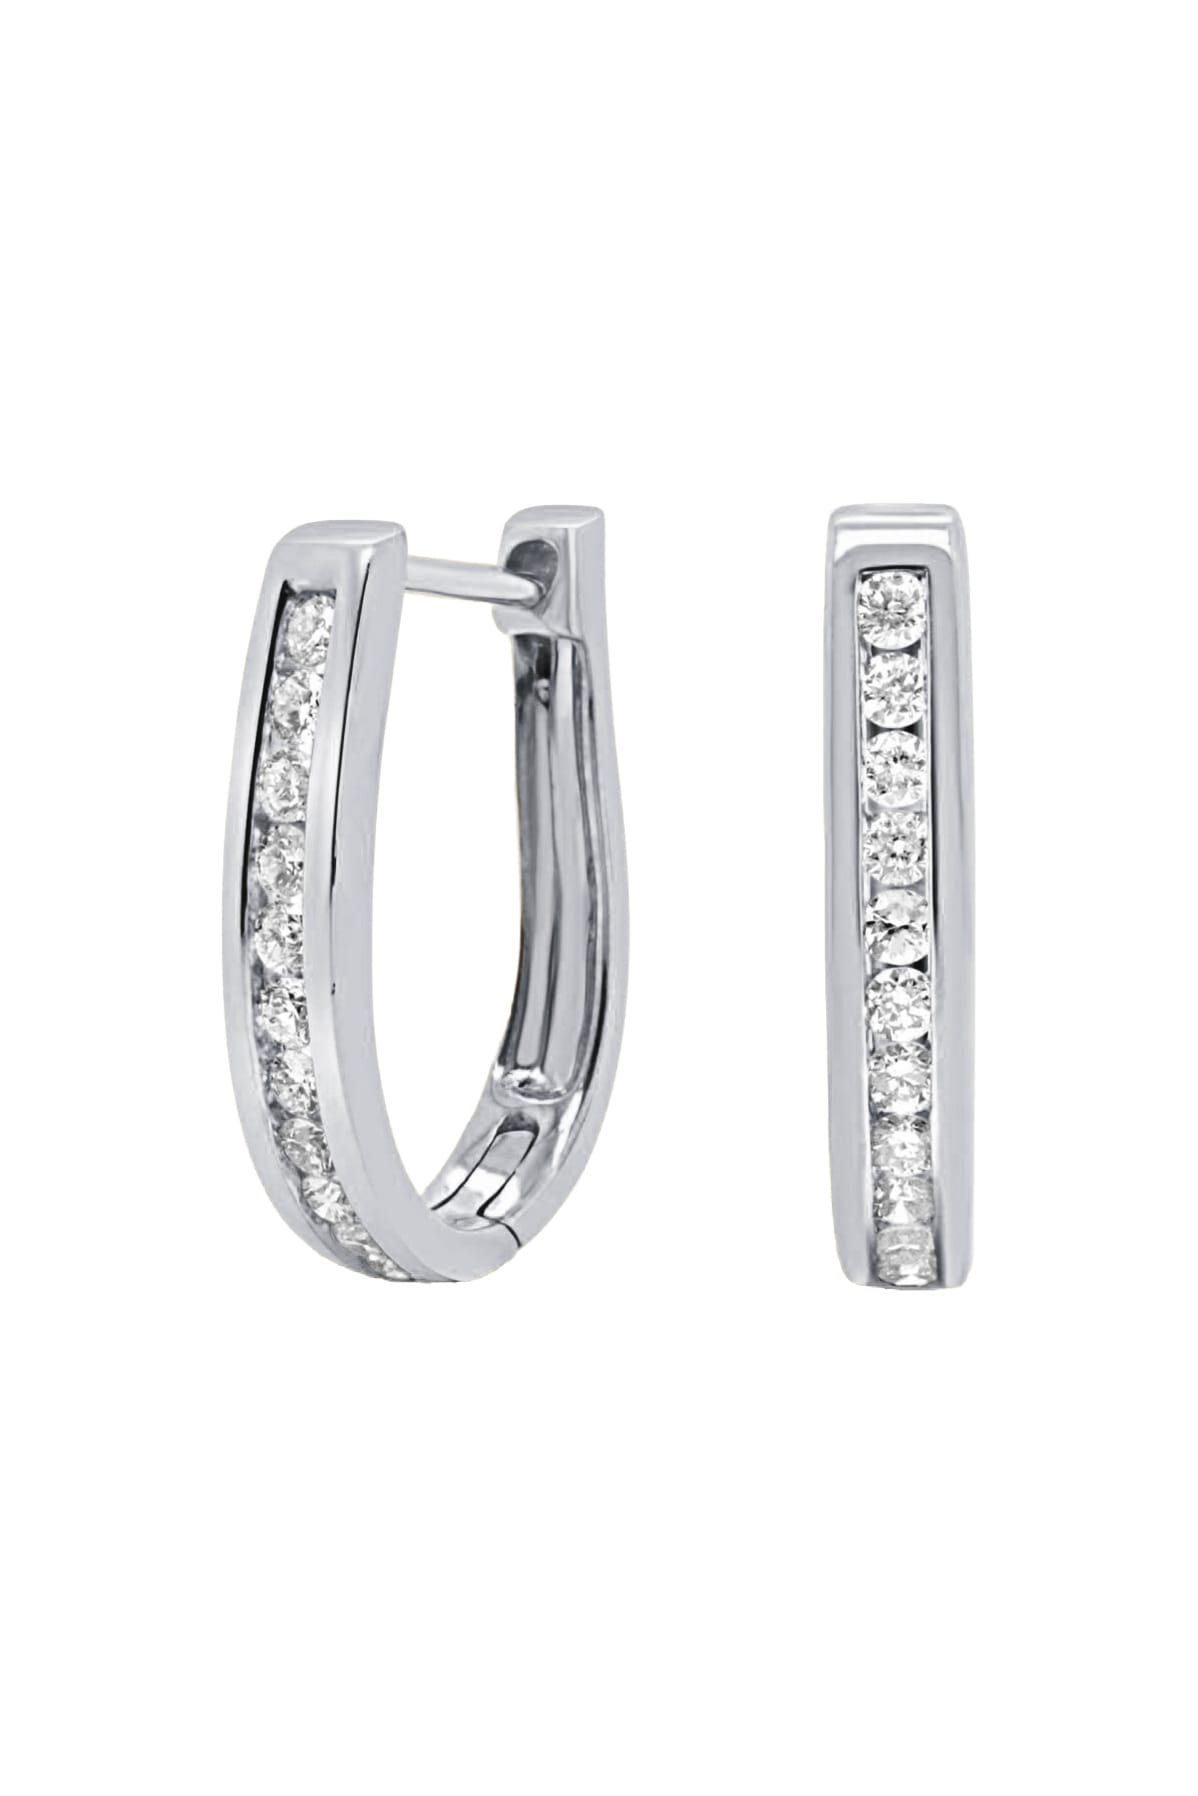 LeGassick Diamond Huggie Earrings available at LeGassick Diamonds and Jewellery Gold Coast, Australia